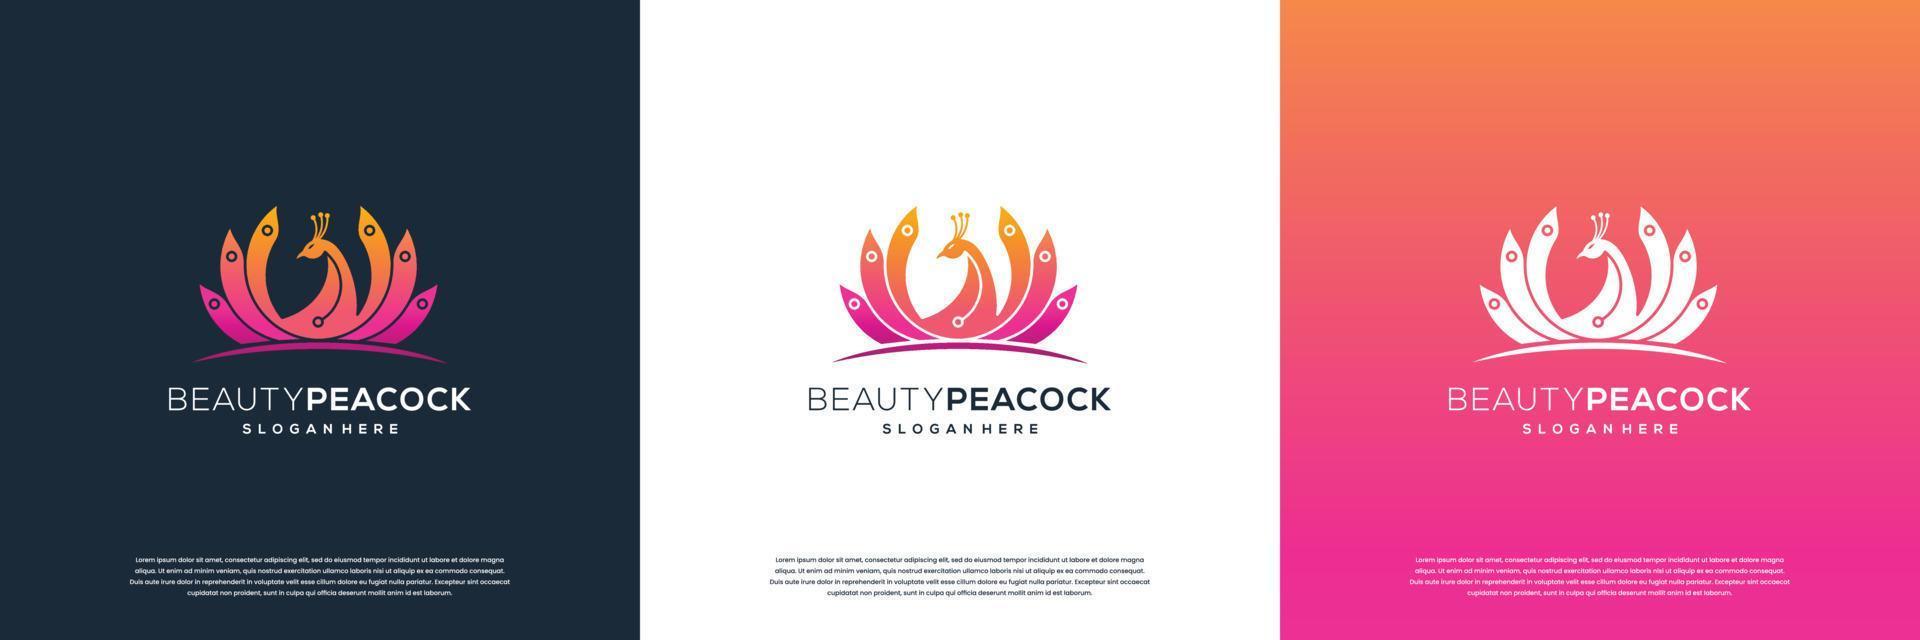 Beautiful peacock logo design template, feminine design concept for beauty salon, massage, cosmetic and spa. vector